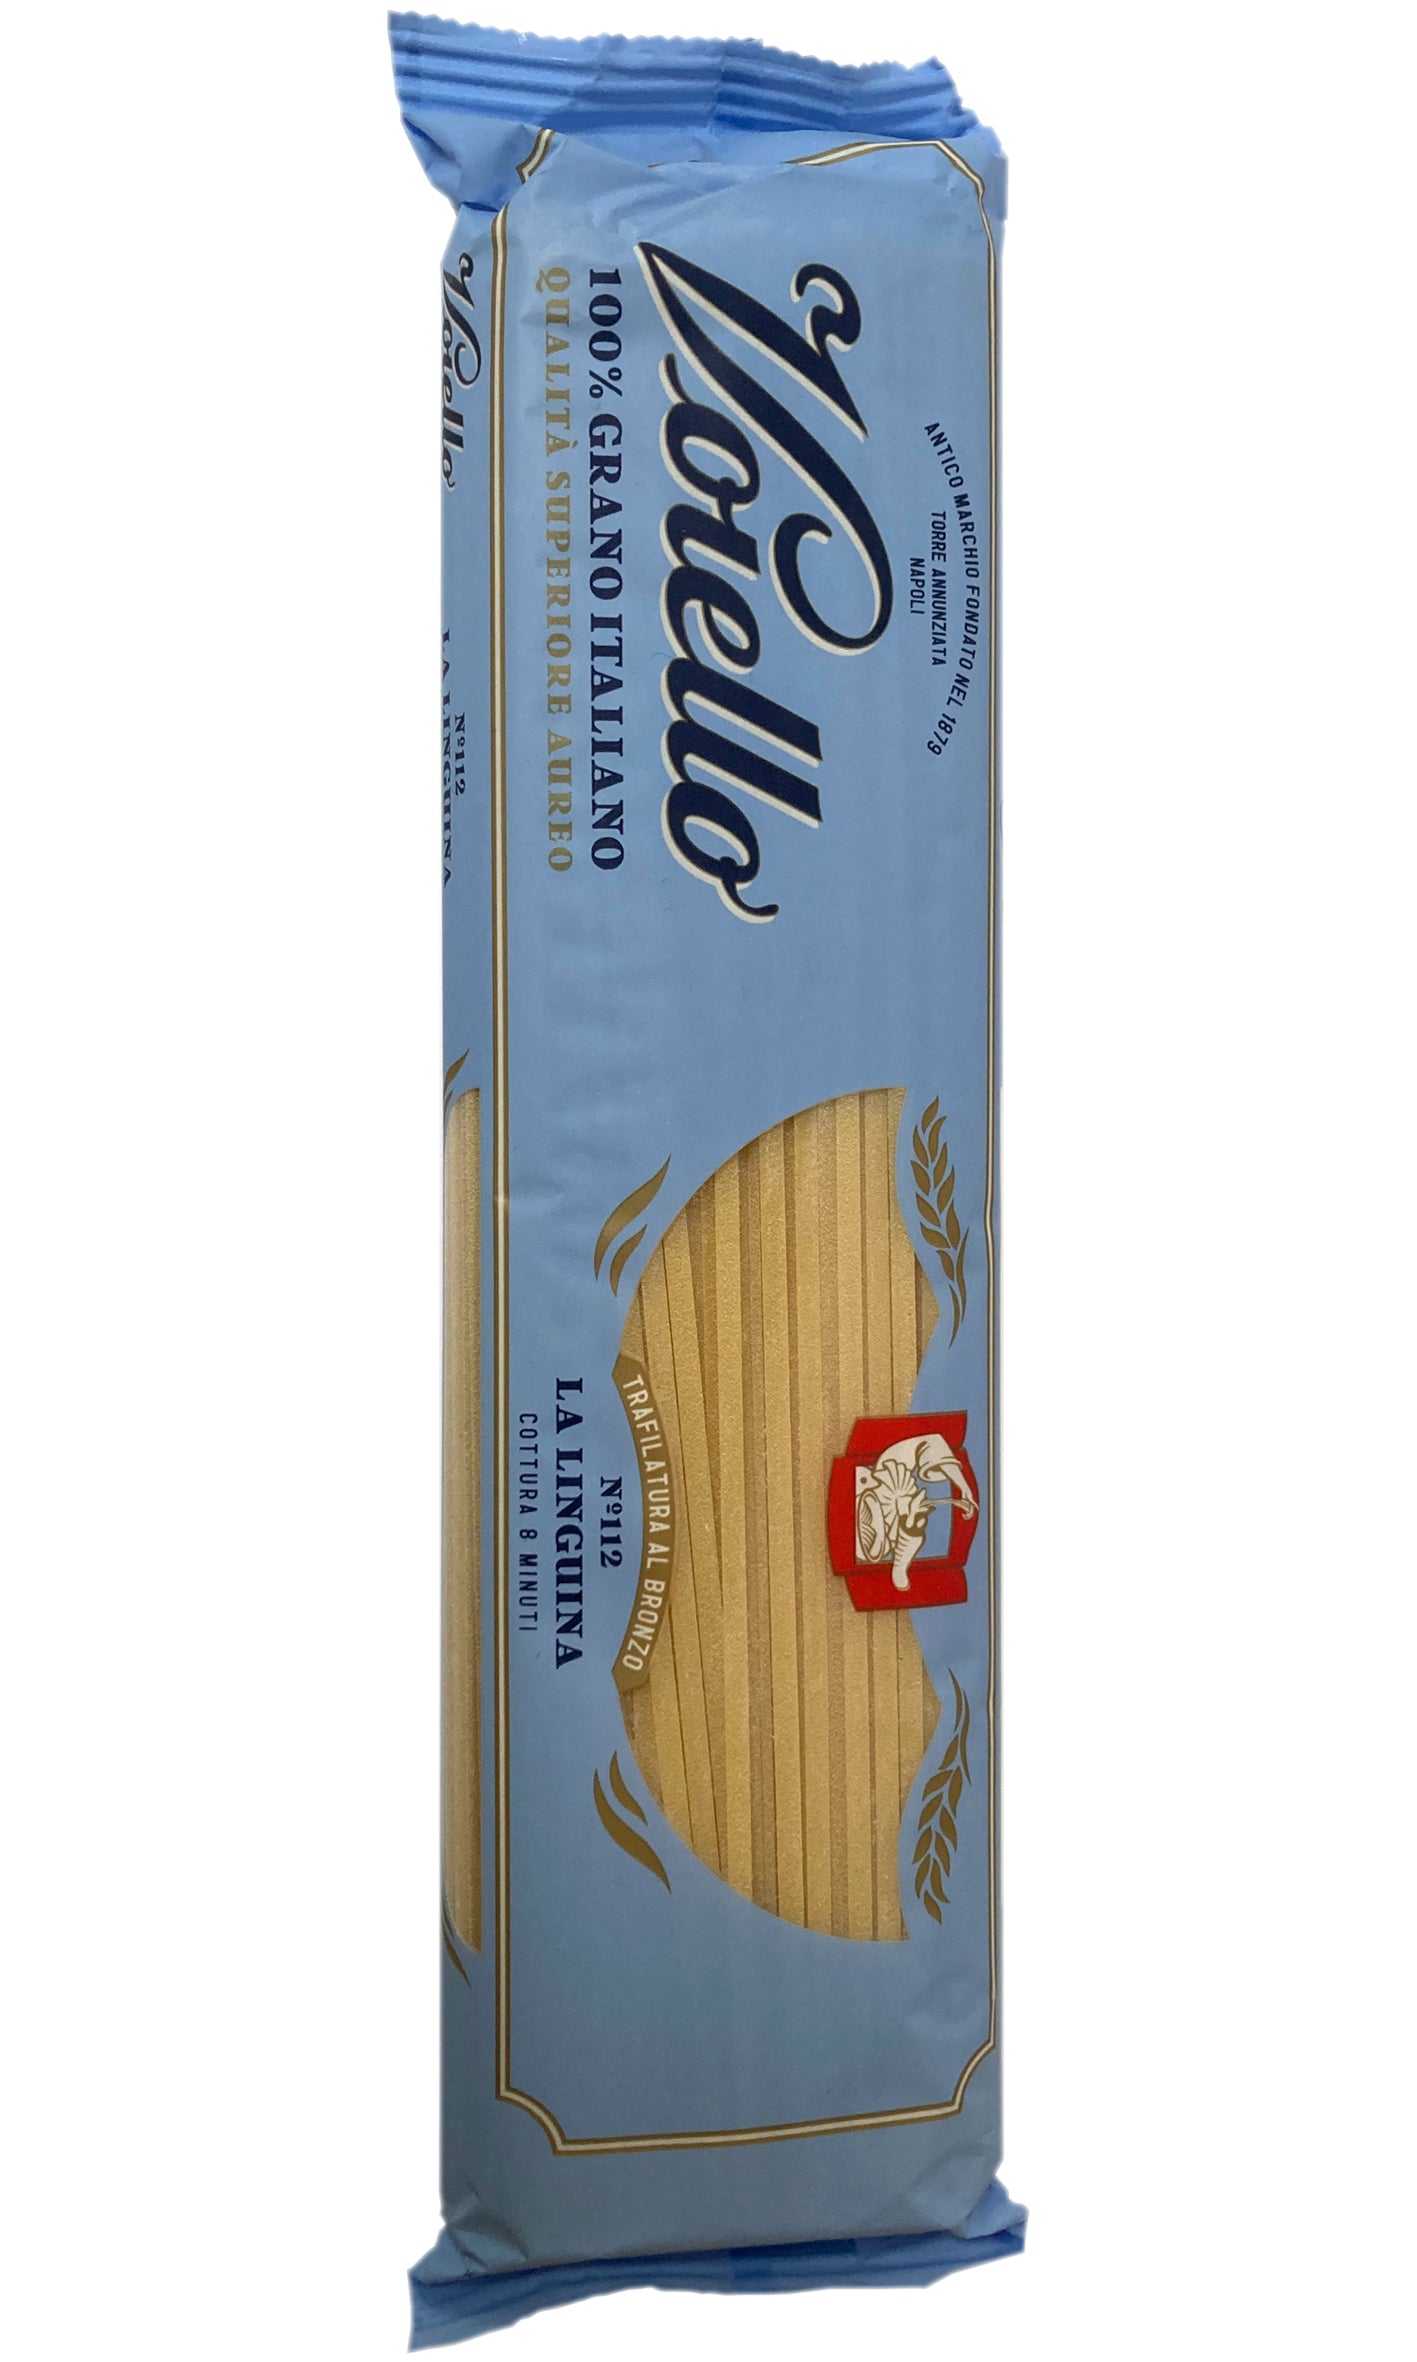 Voiello Pasta di Semola - Linguine N.112 - 500g